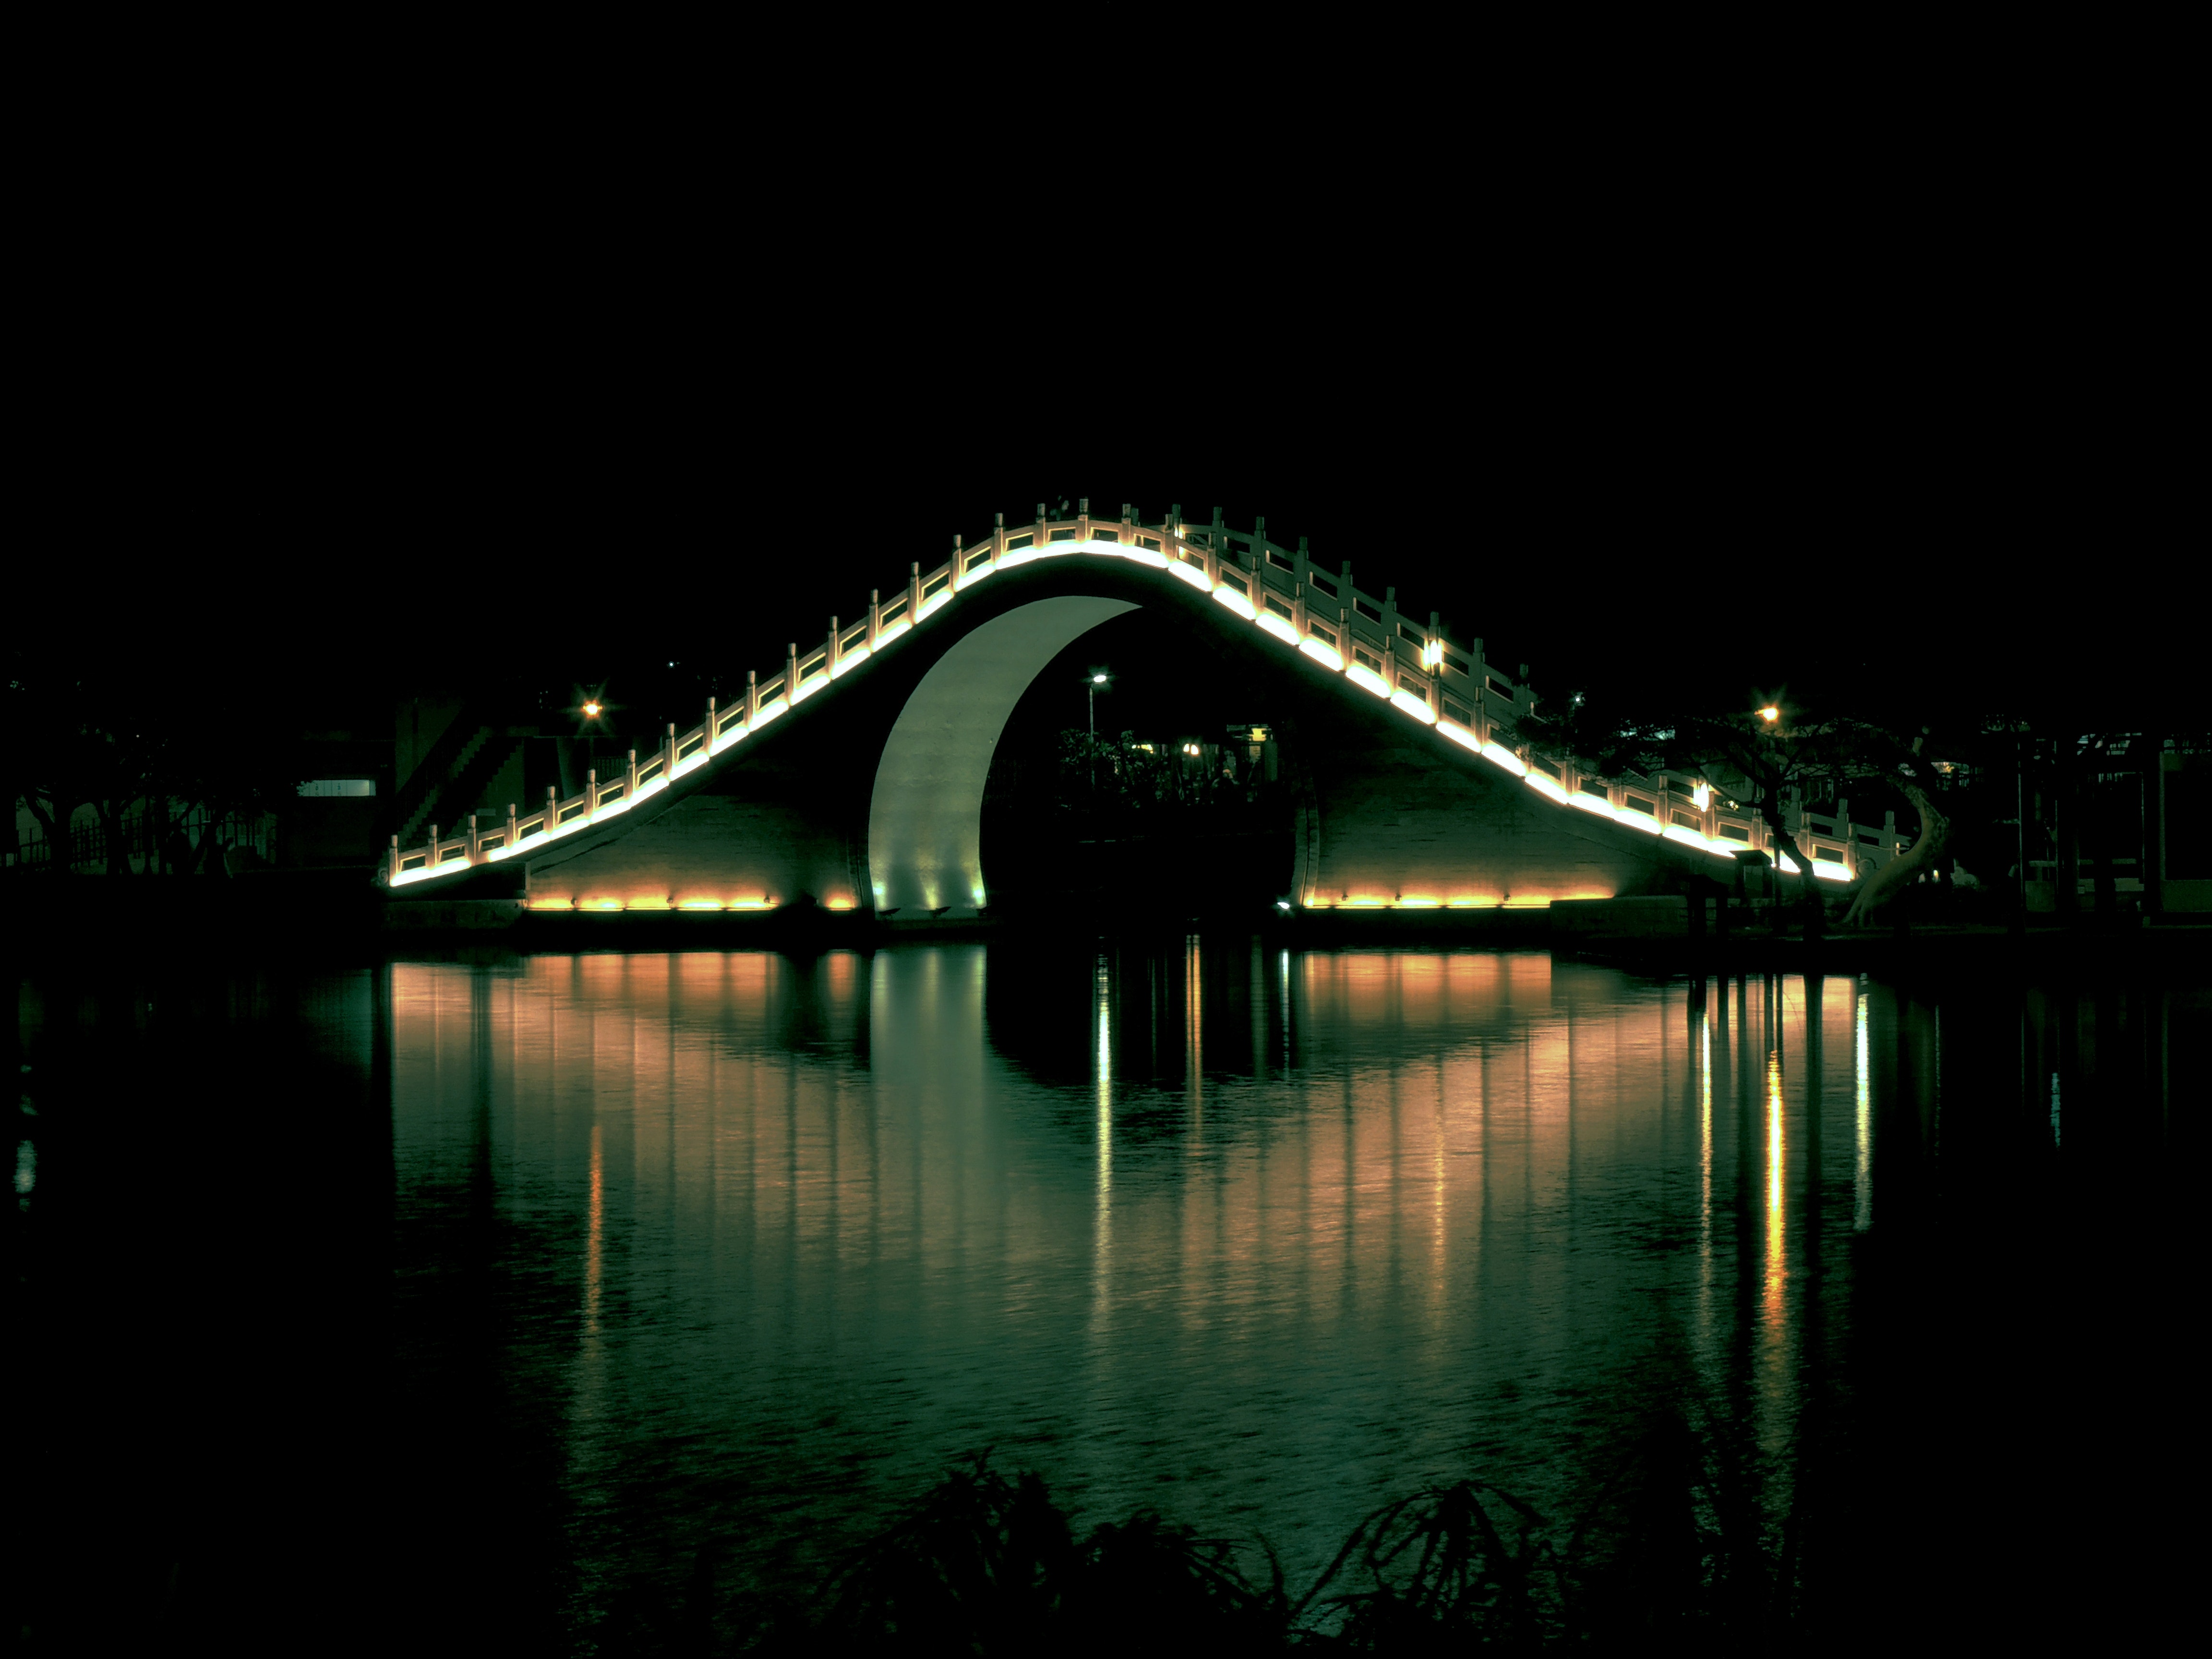 Bridge with lights during nightime photo